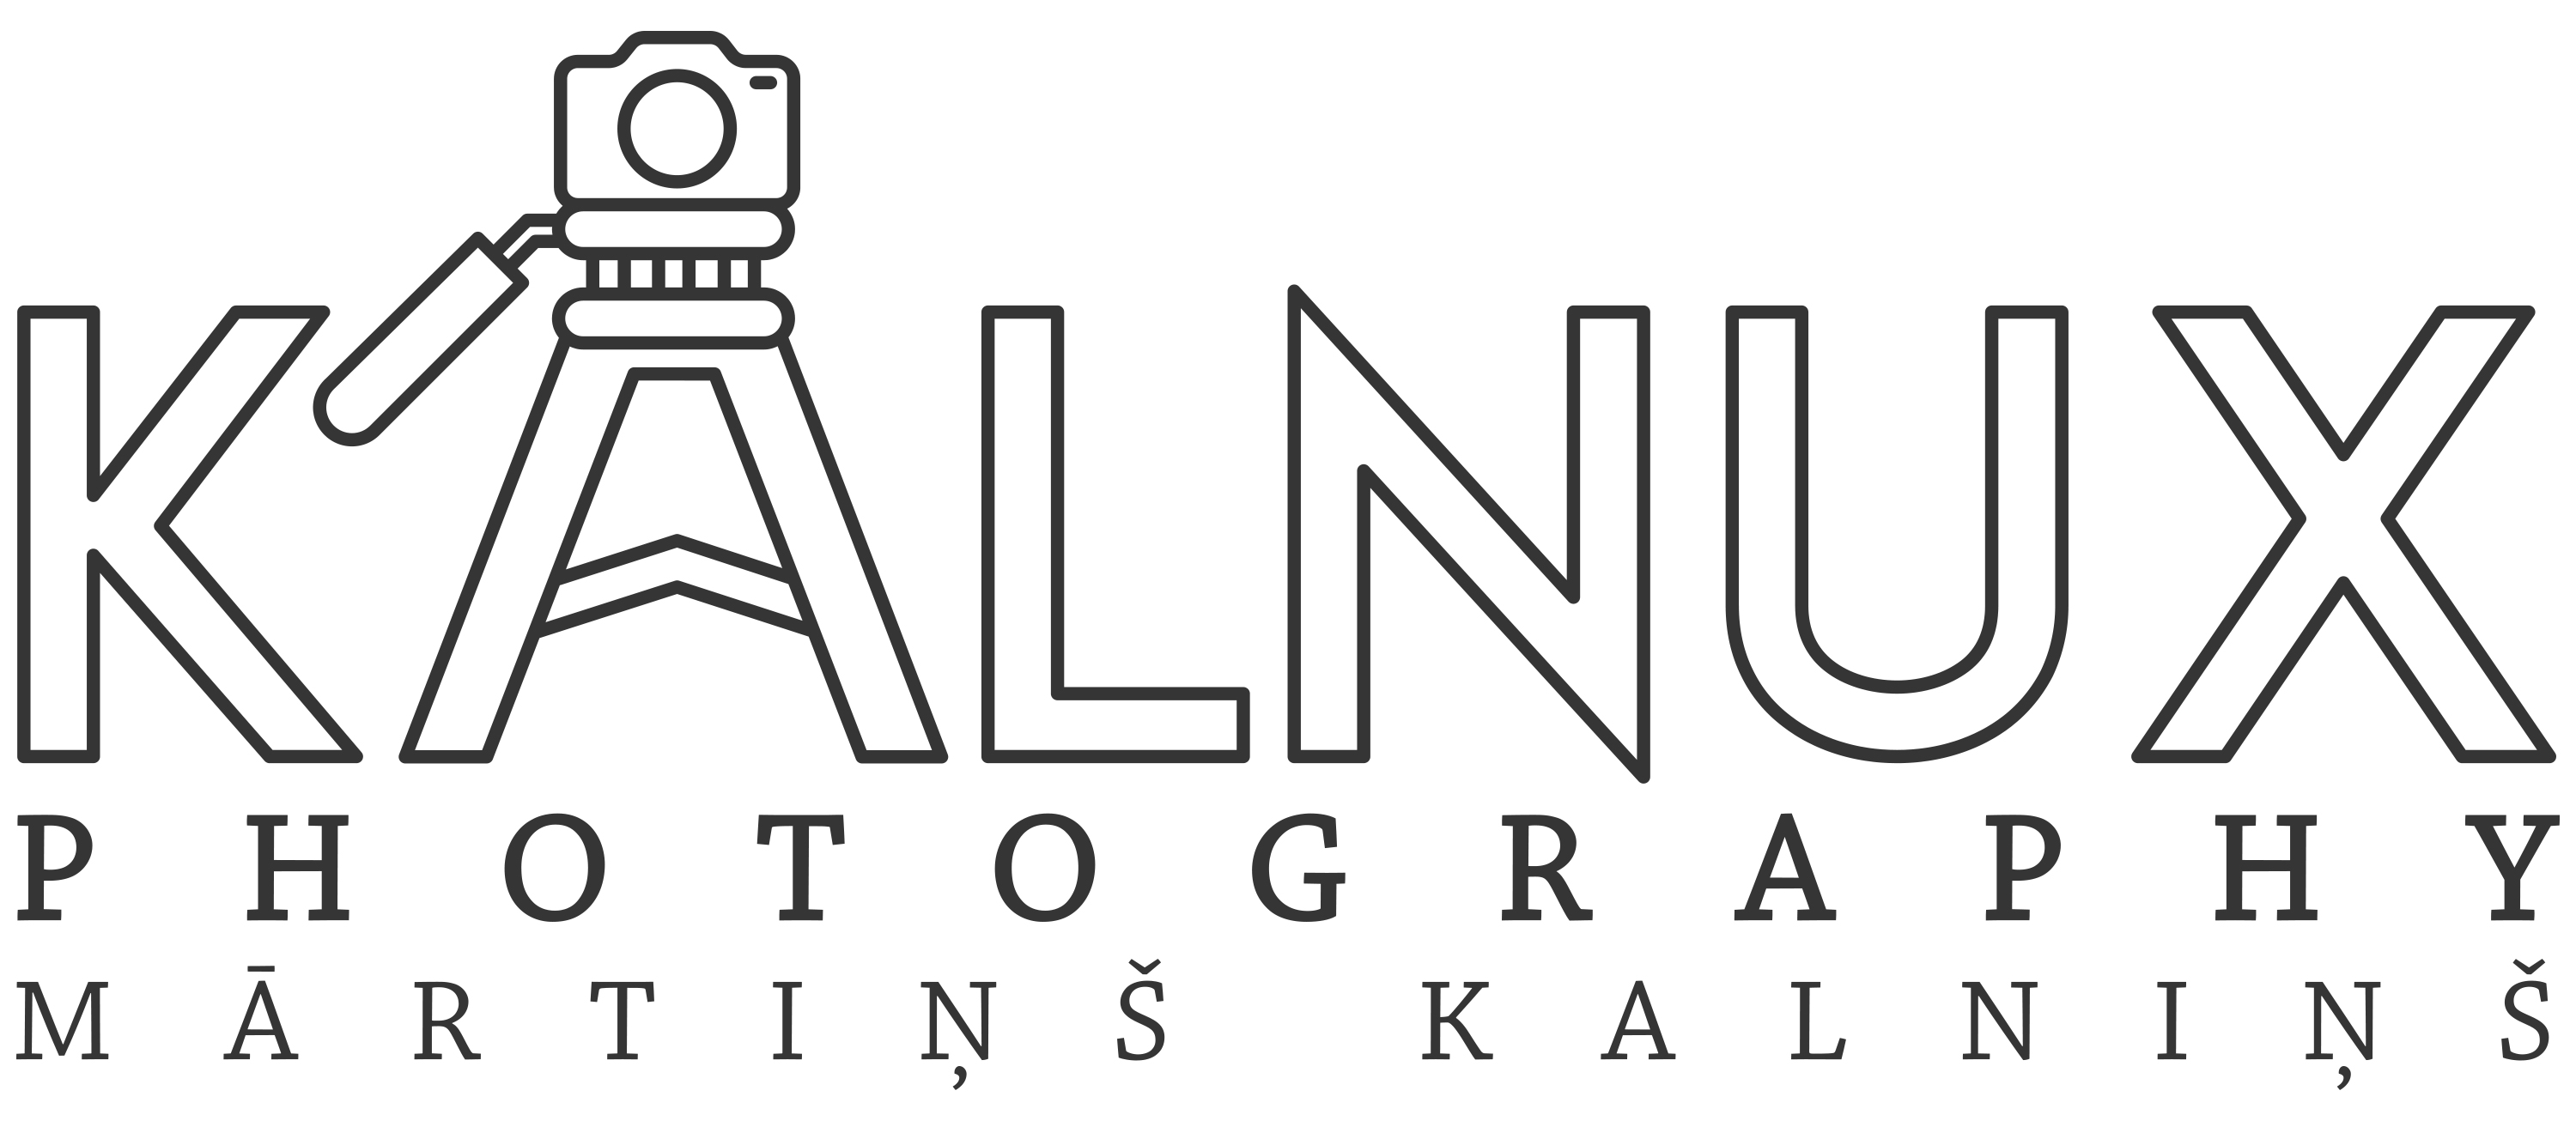 Kalnux photograpy logo